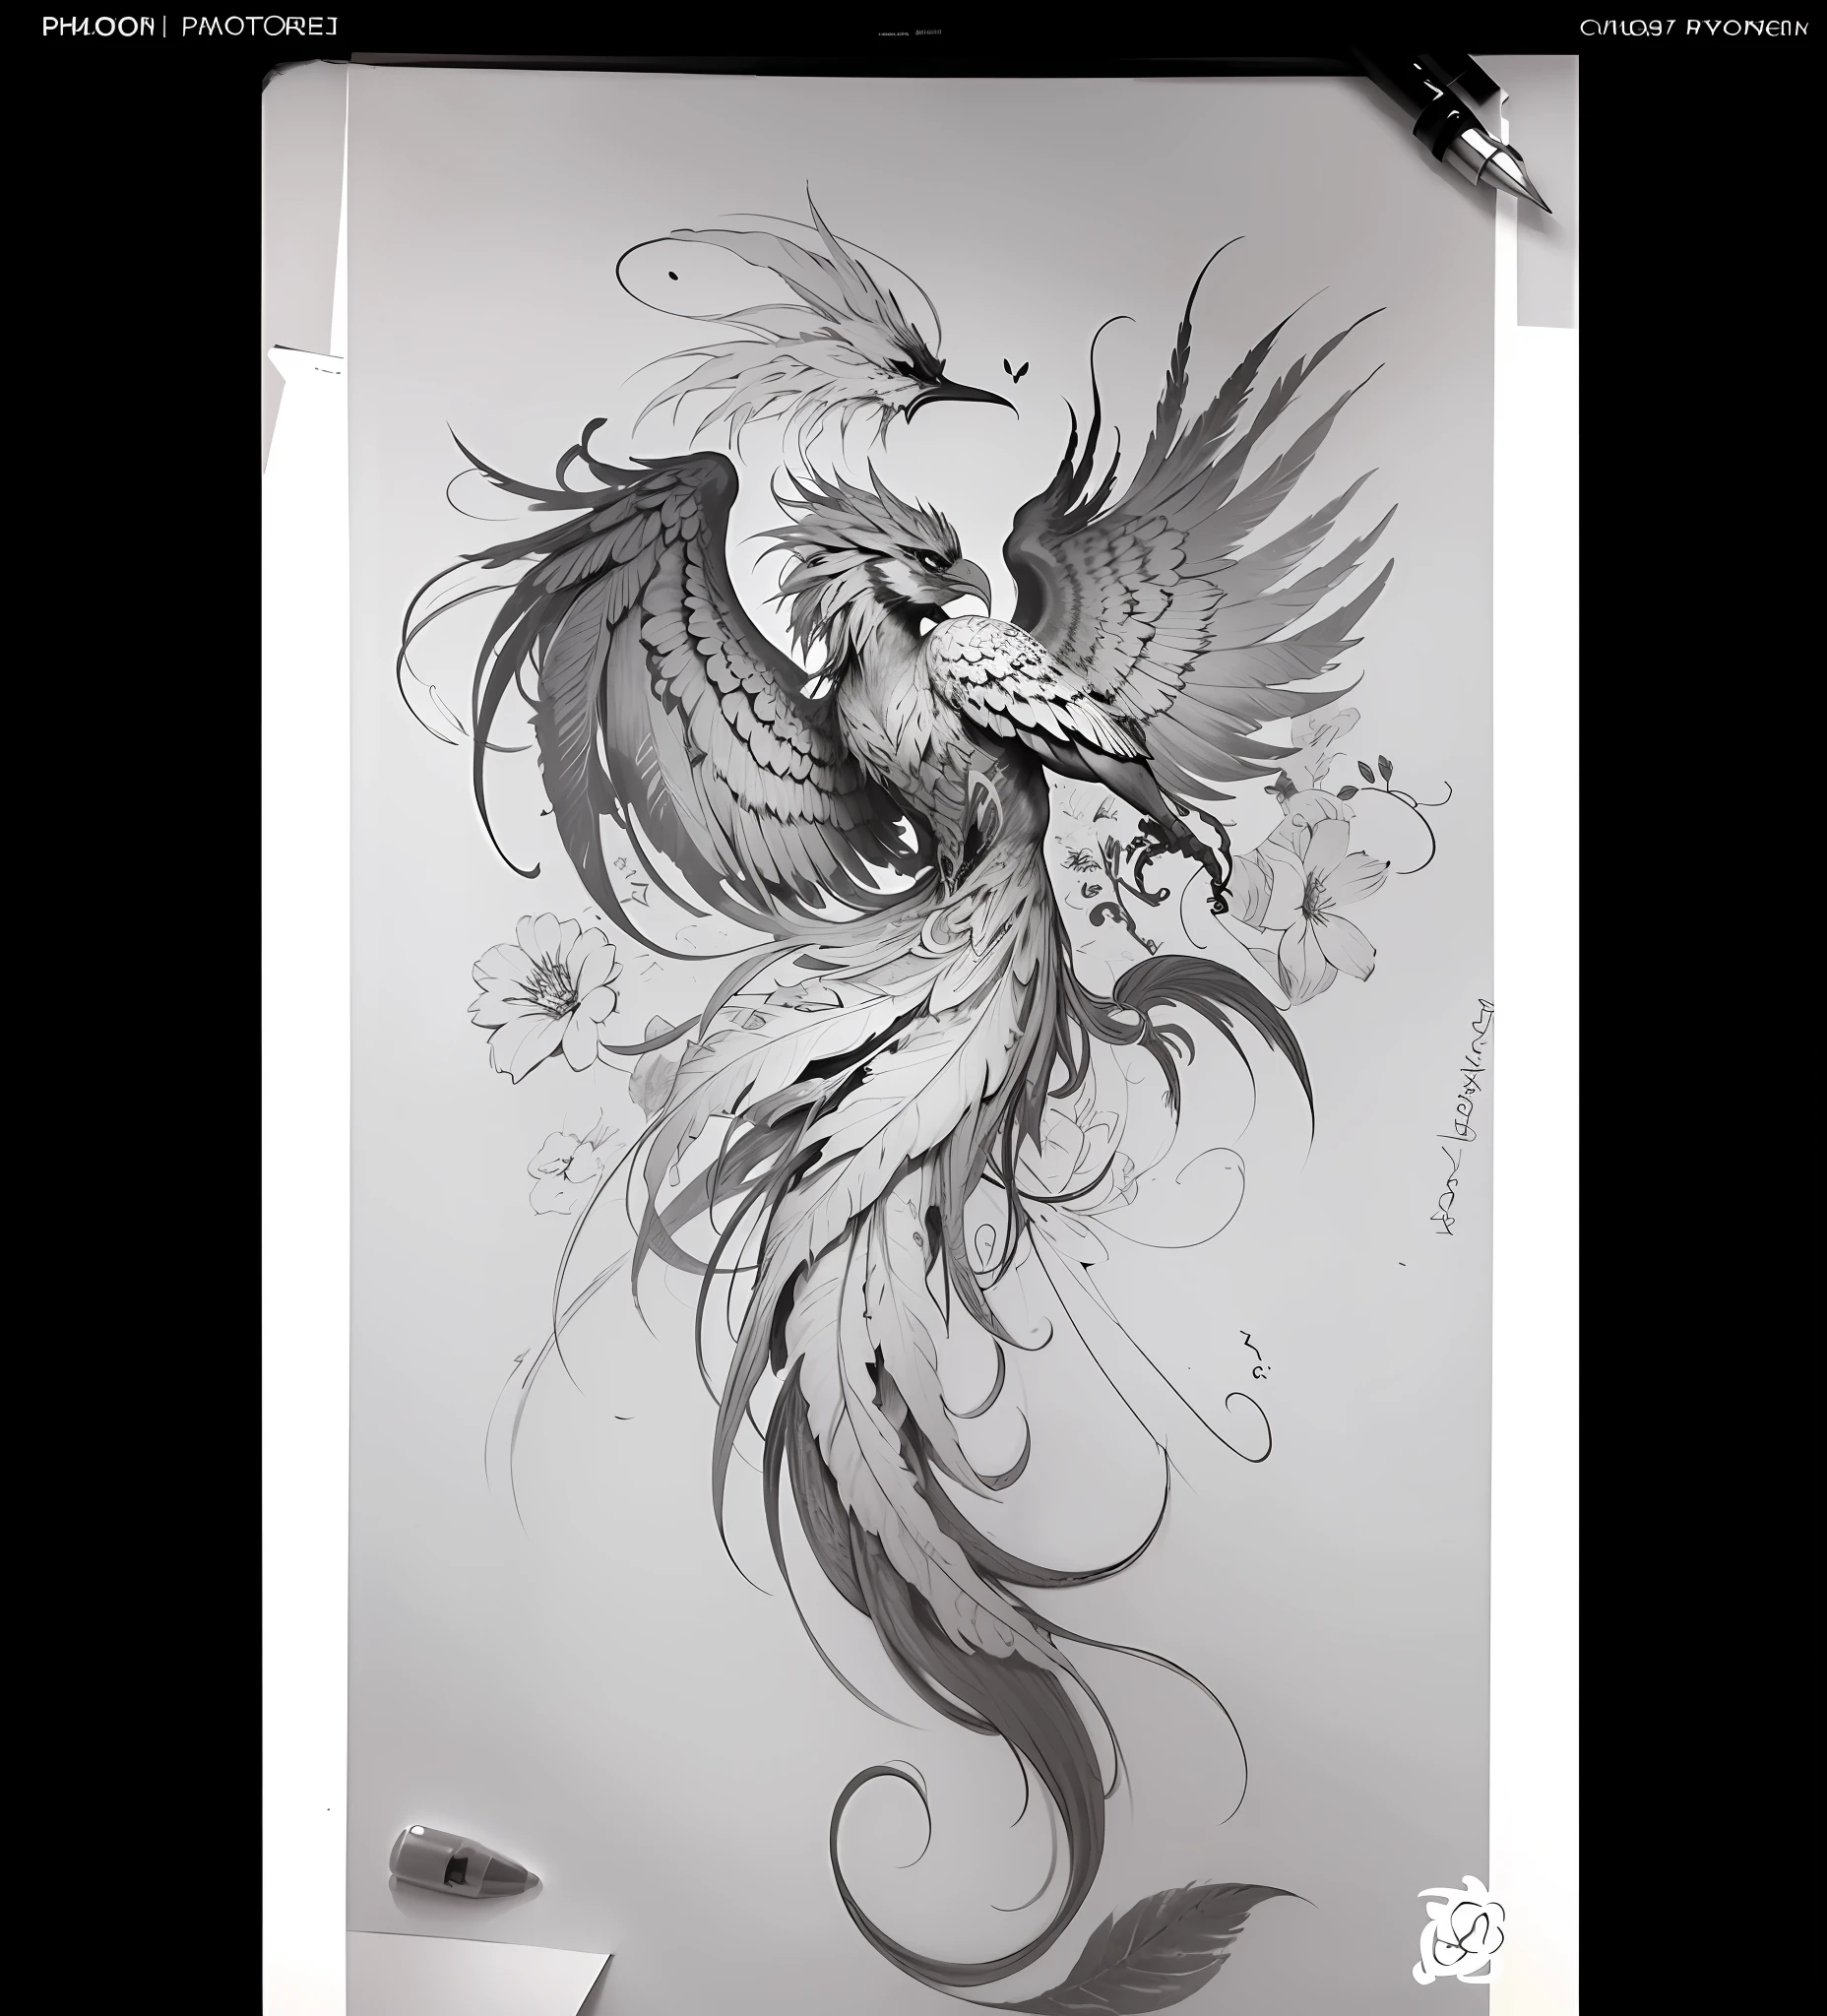 Phoenix, chinese, realistic, long tail, elegant, wings closed long neck,  long feathers, in flight, graceful, tattoo idea | TattoosAI